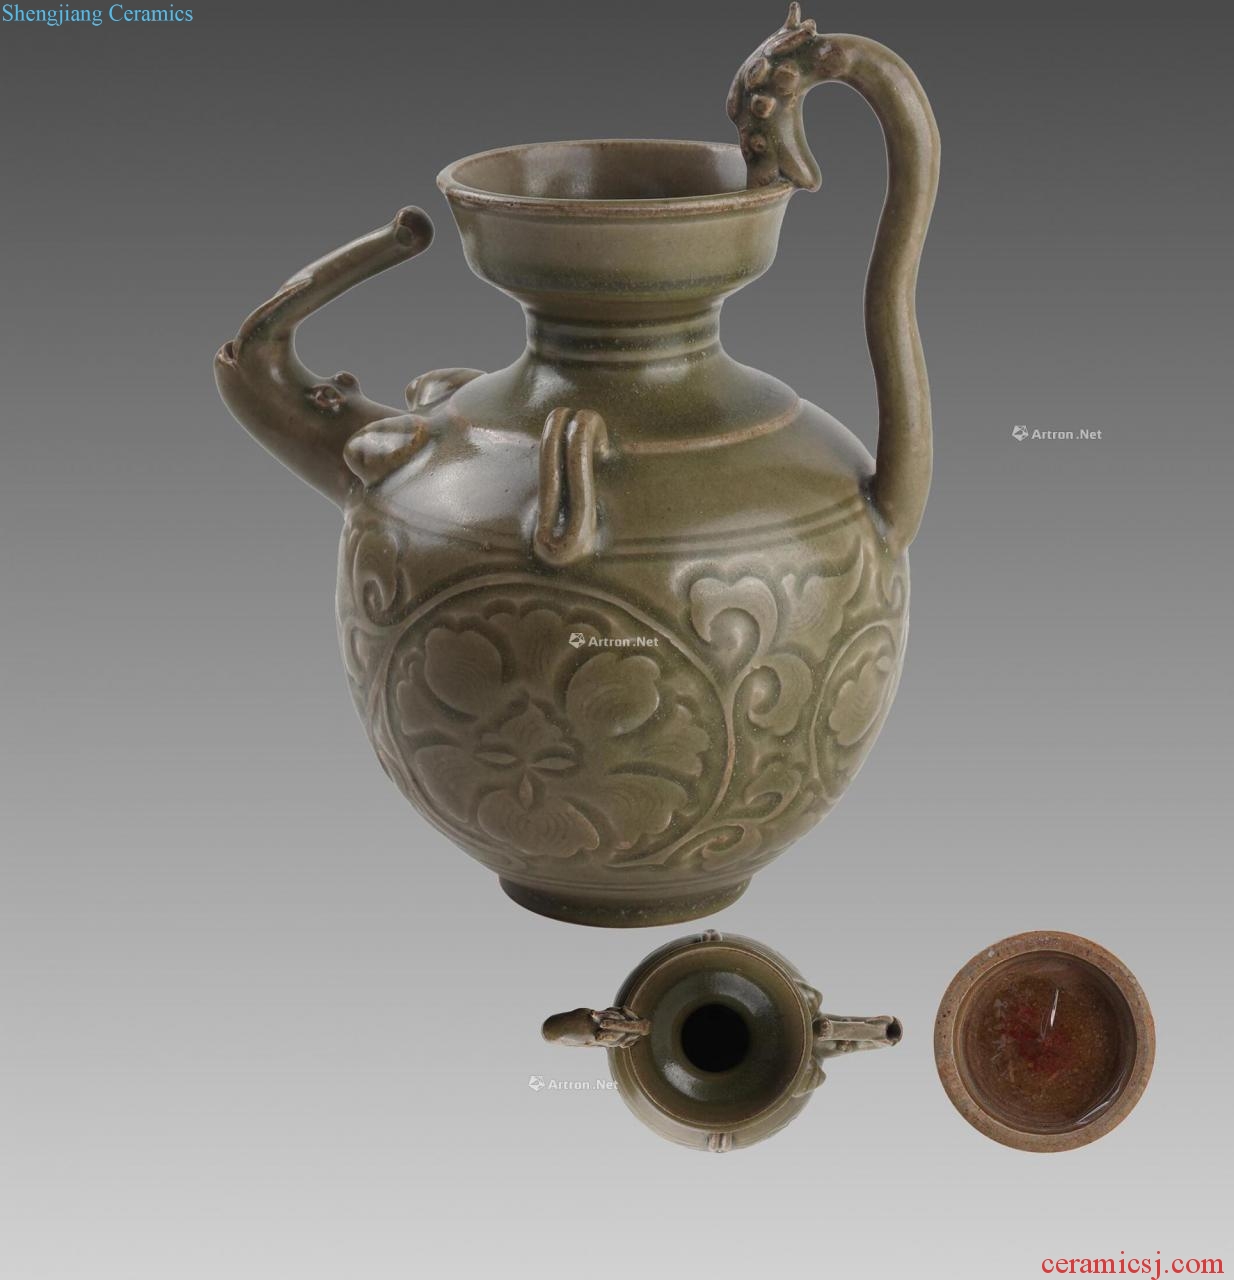 The song dynasty Yao state kiln green glaze hand-cut double dragon handle pot